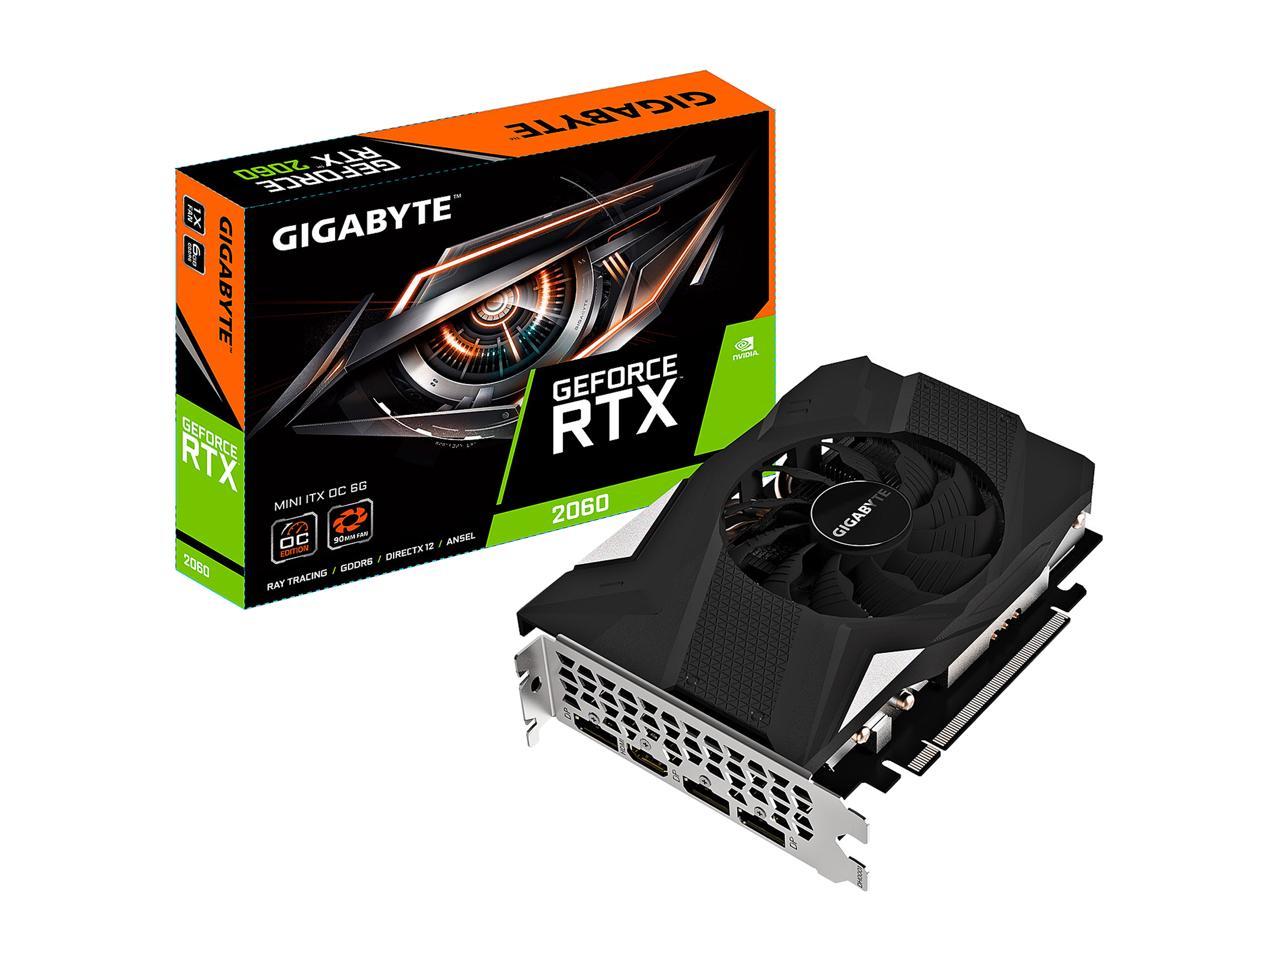 GIGABYTE GeForce RTX 2060 DirectX 12 GV-N2060IXOC-6GD rev. 2.0 6GB 192-Bit GDDR6 PCI Express 3.0 x16 ITX Video Card